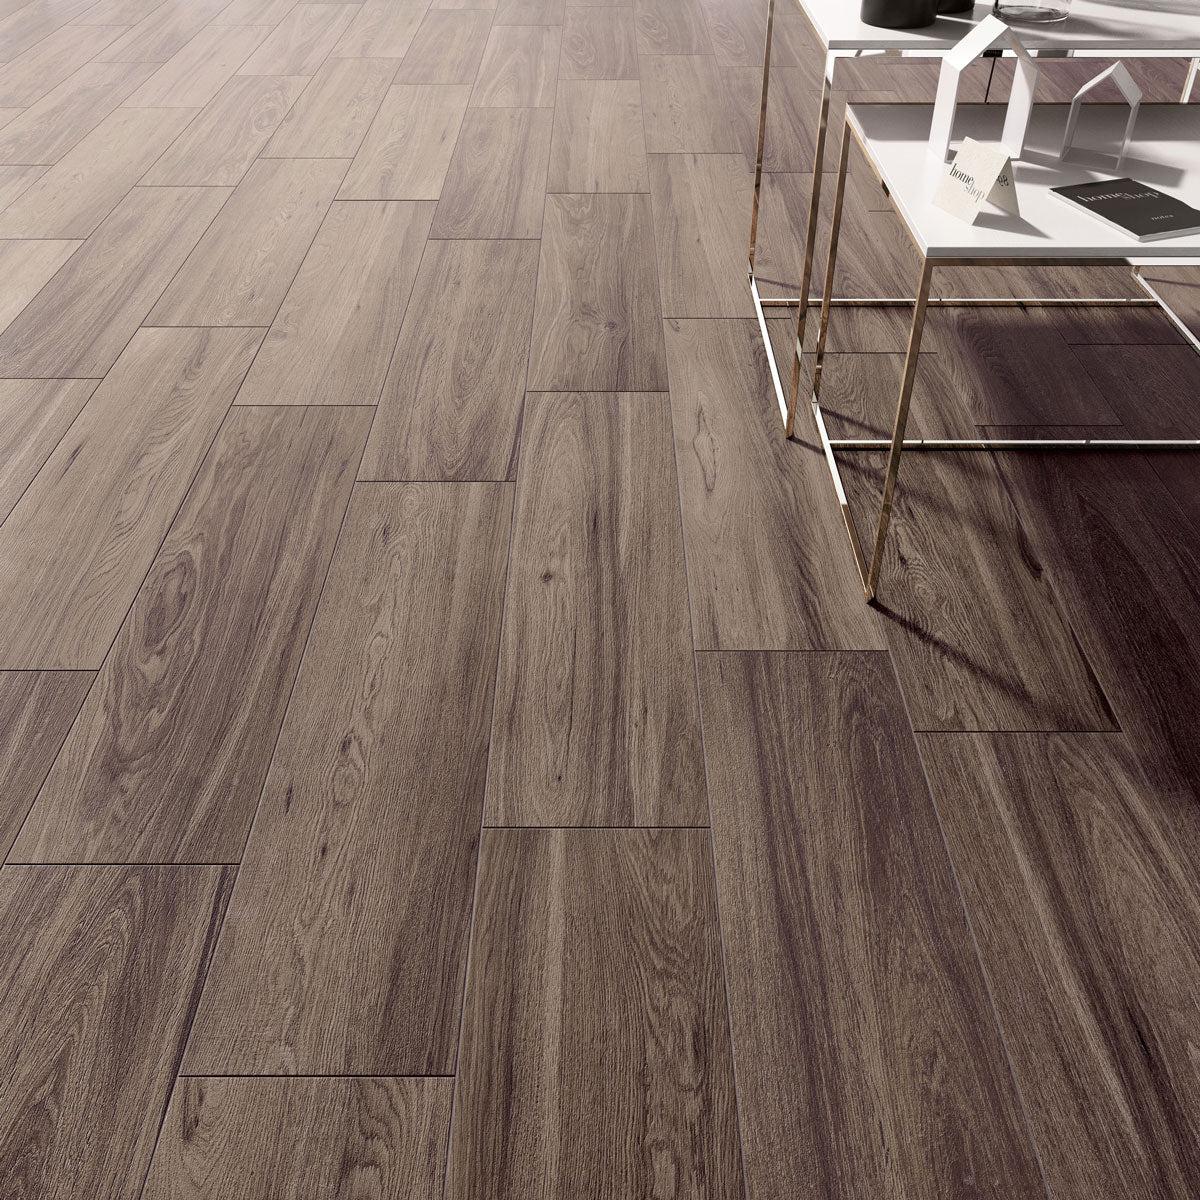 Acorn Walnut Hardwood Floor Tiles